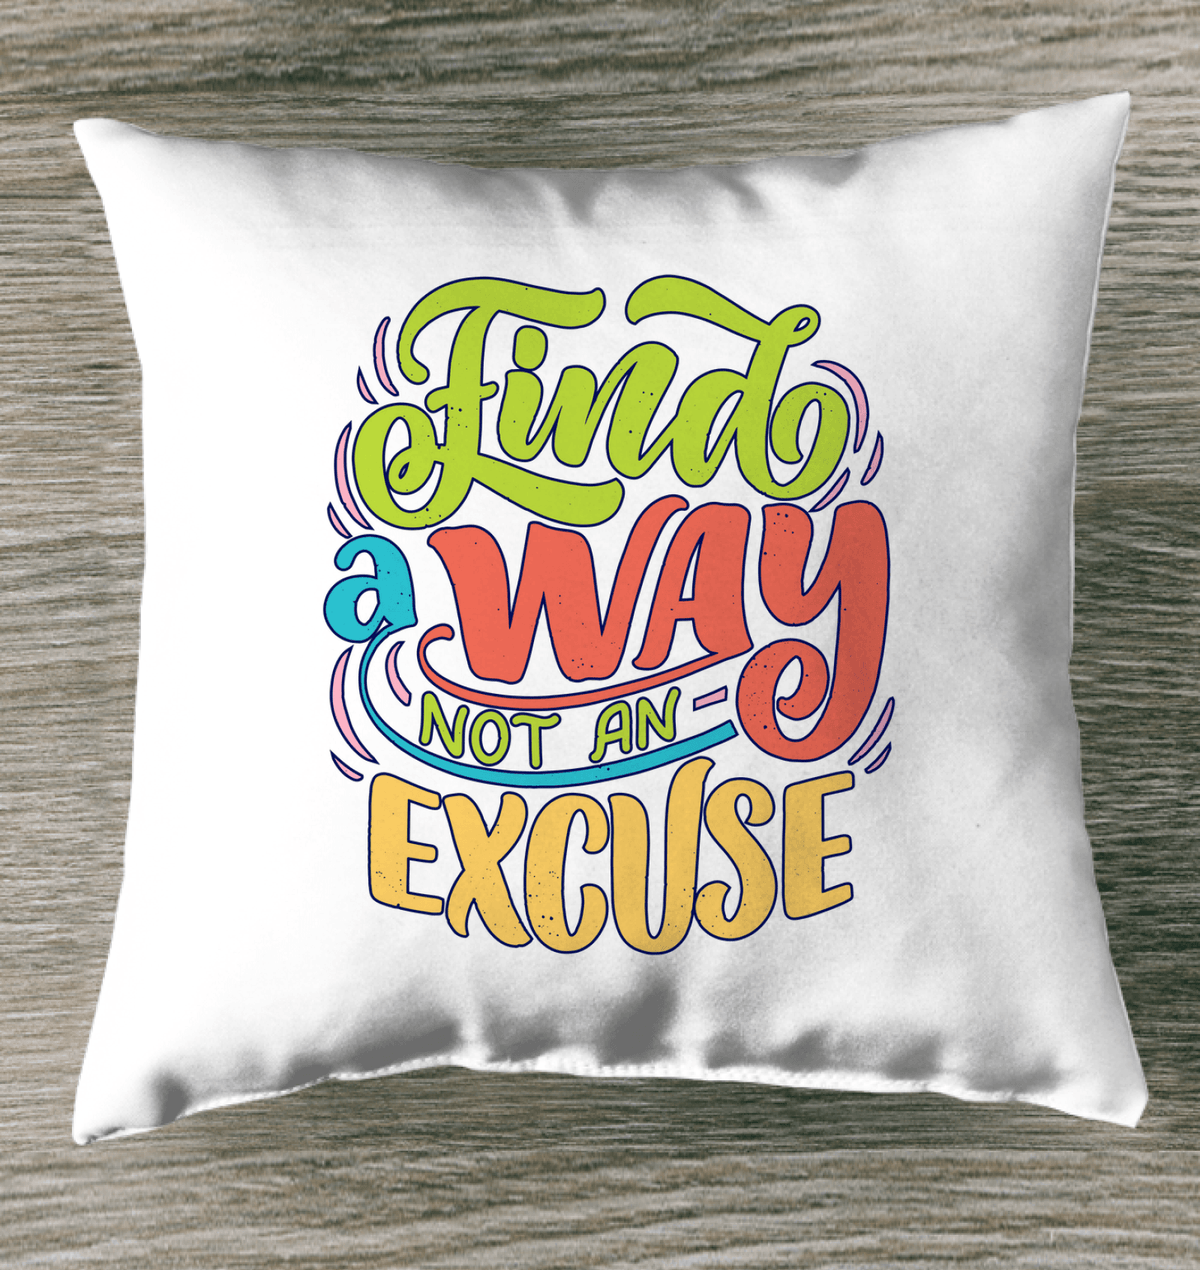 Find A Way Outdoor Pillow - Beyond T-shirts